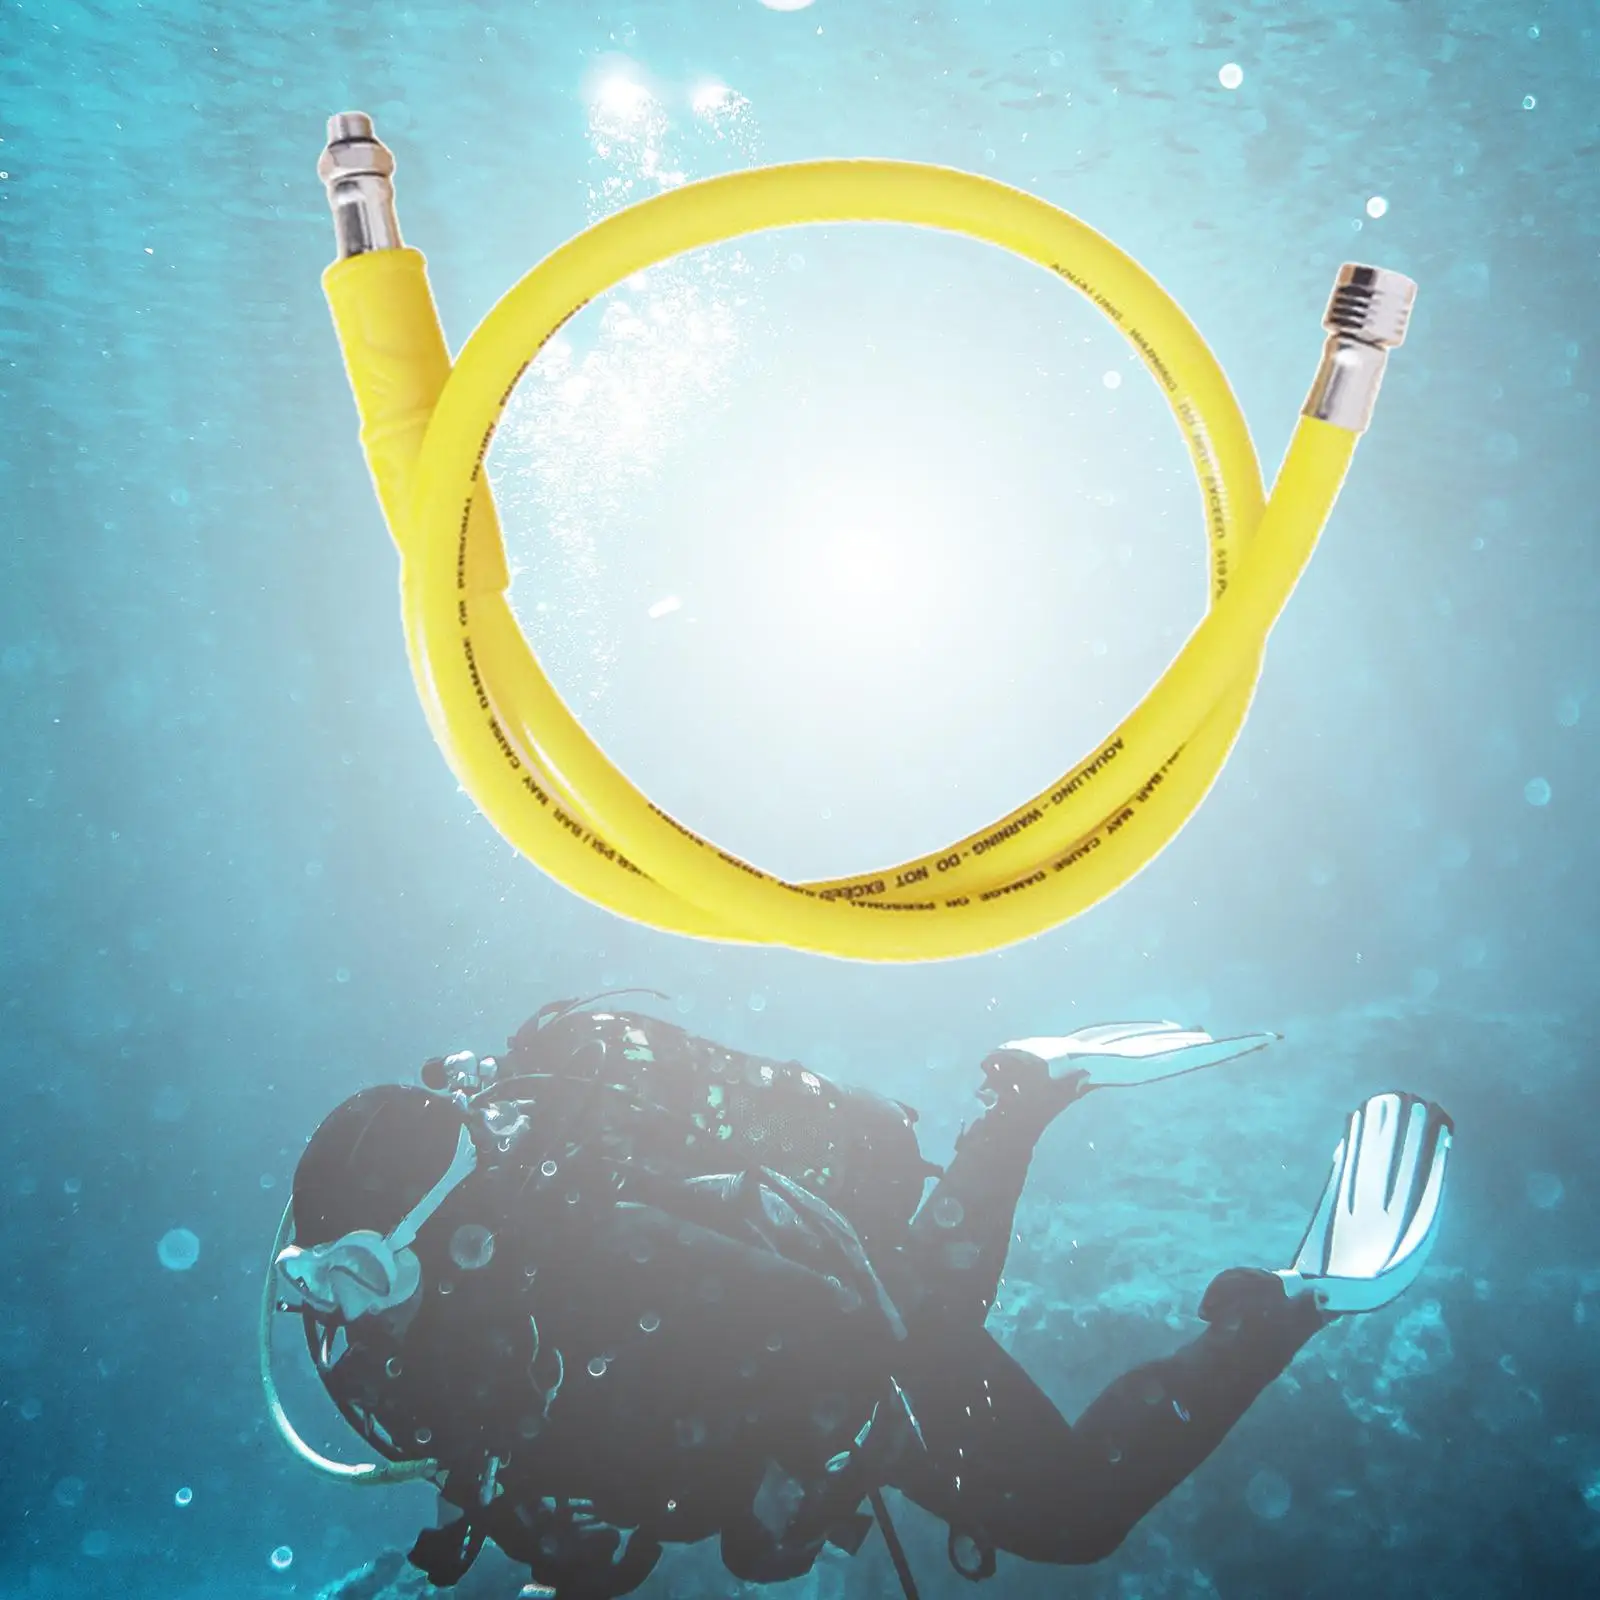 Medium Pressure Hose Breath Adjuster Portable Durable Scuba Diving Regulator for Underwater Farming Water Sports Snorkeling